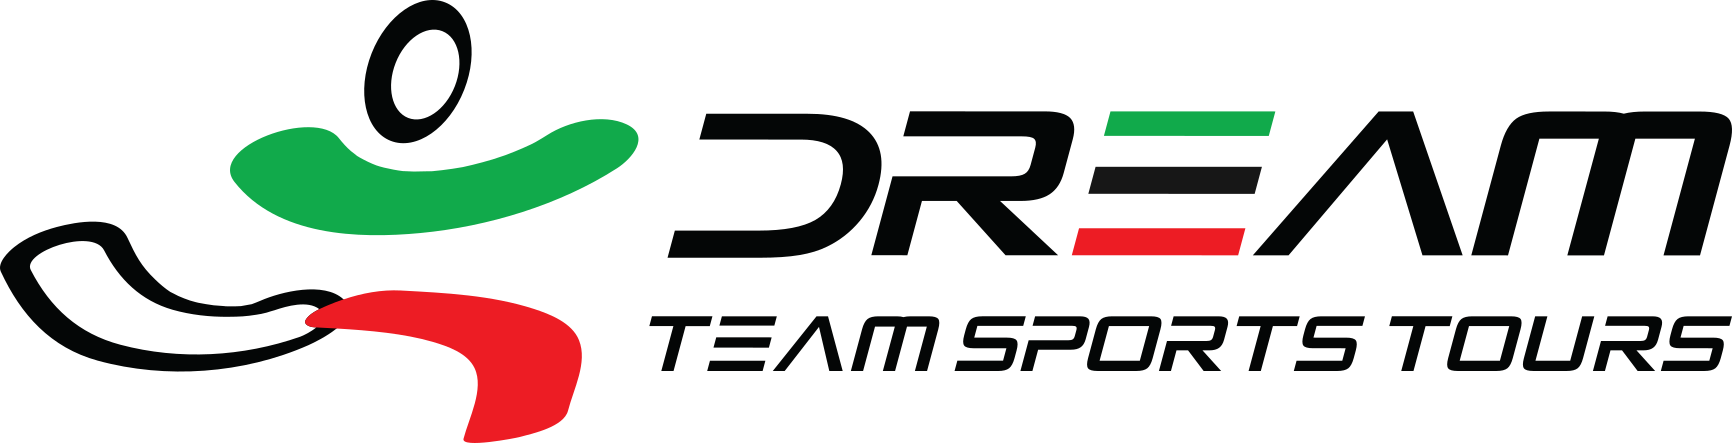 Dream Team Sports Tours